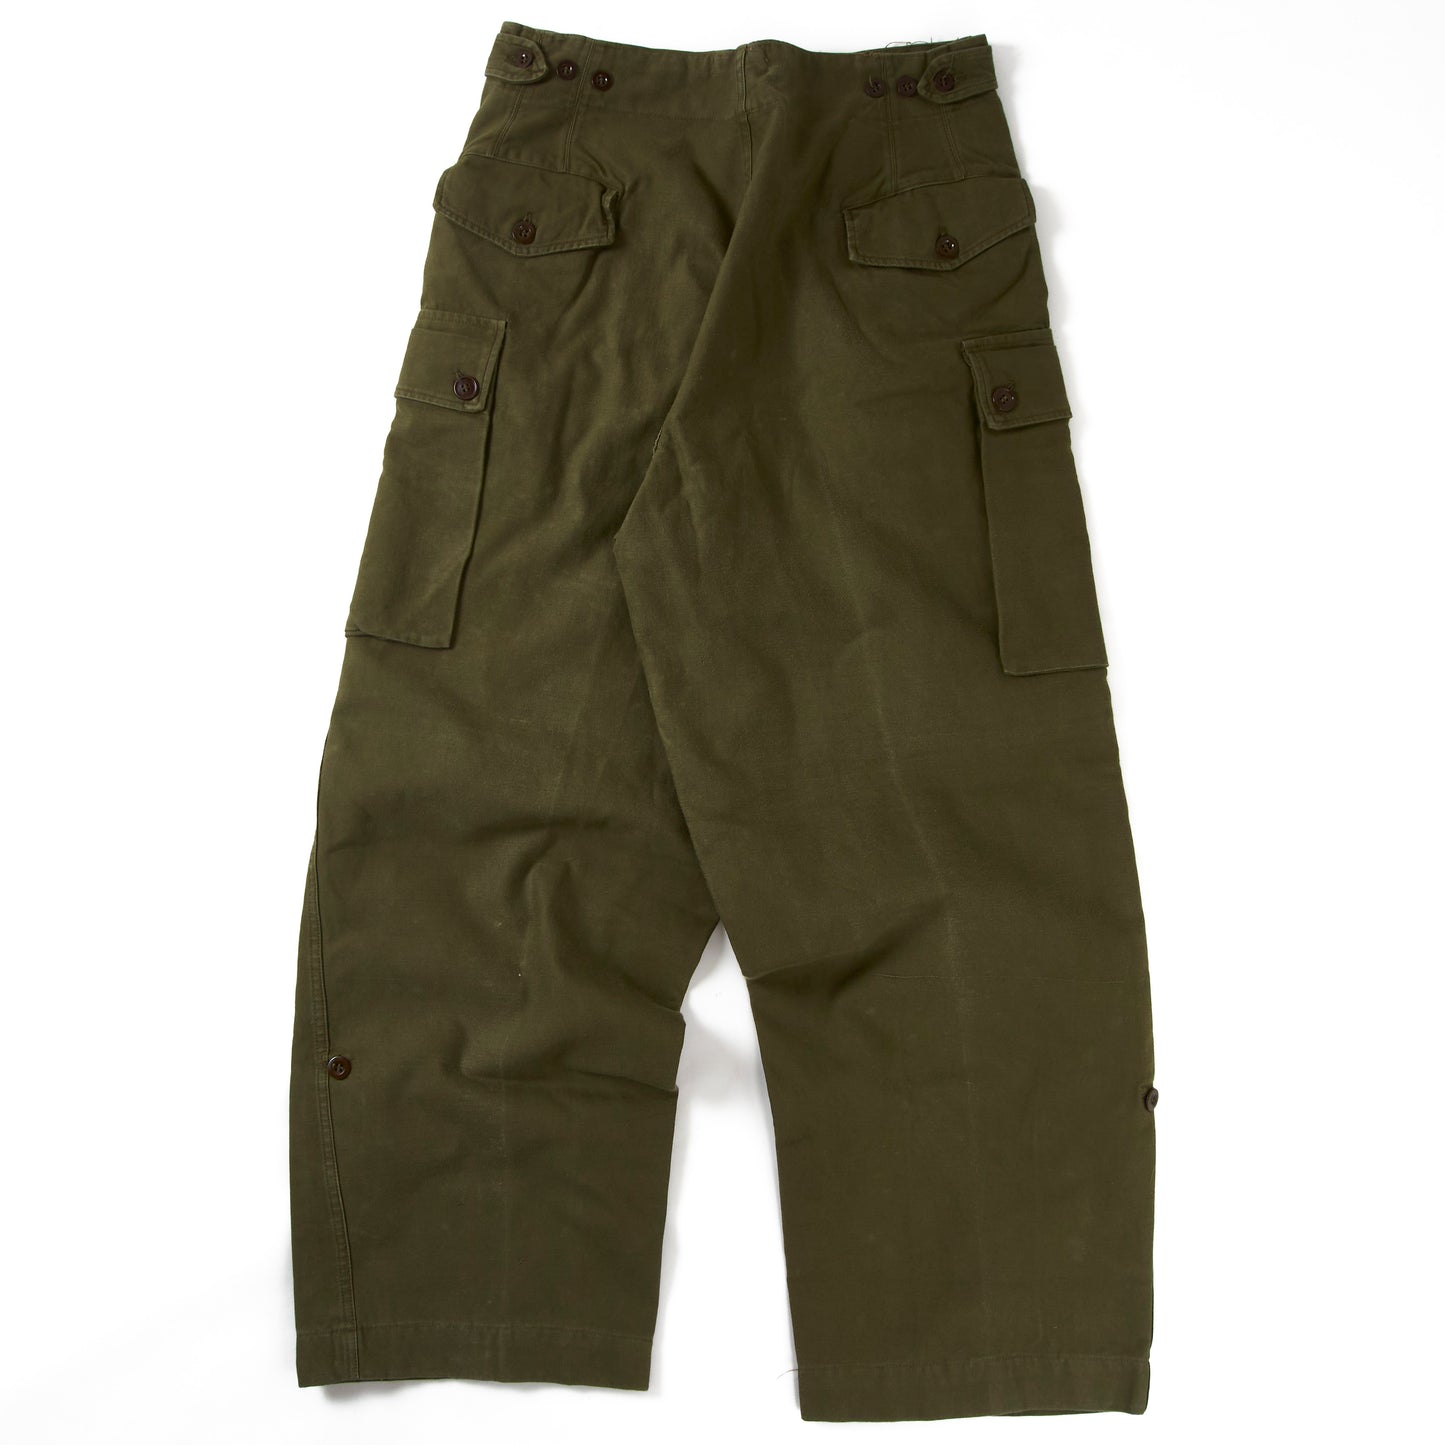 1958 Dutch Army Cargo Pants